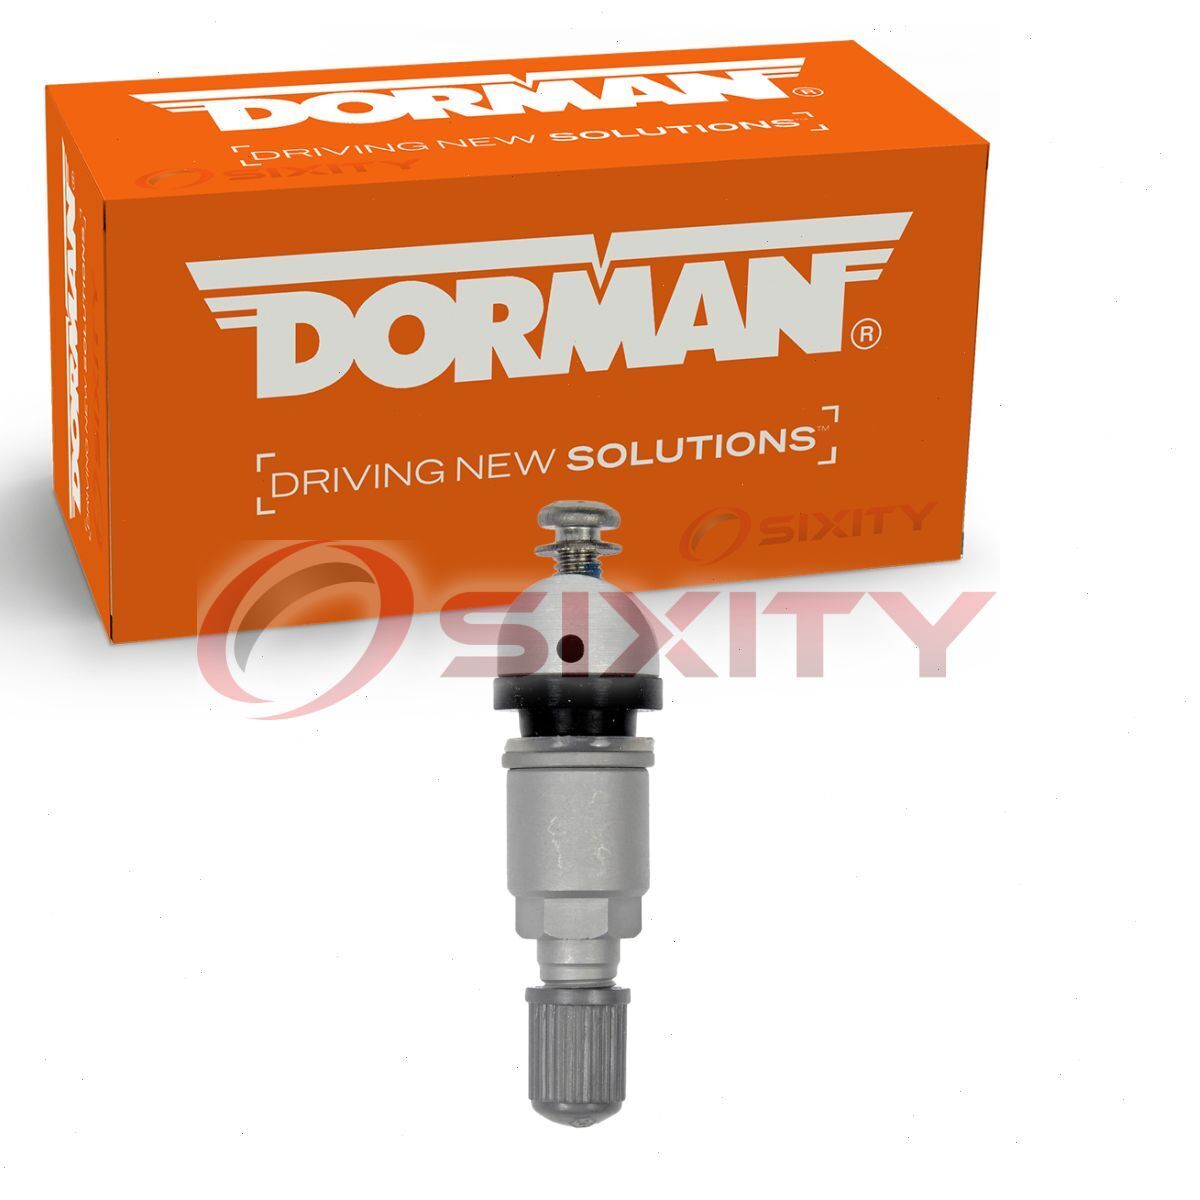 Dorman TPMS Valve Kit for 2014 BMW 535d Tire Pressure Monitoring System  nv